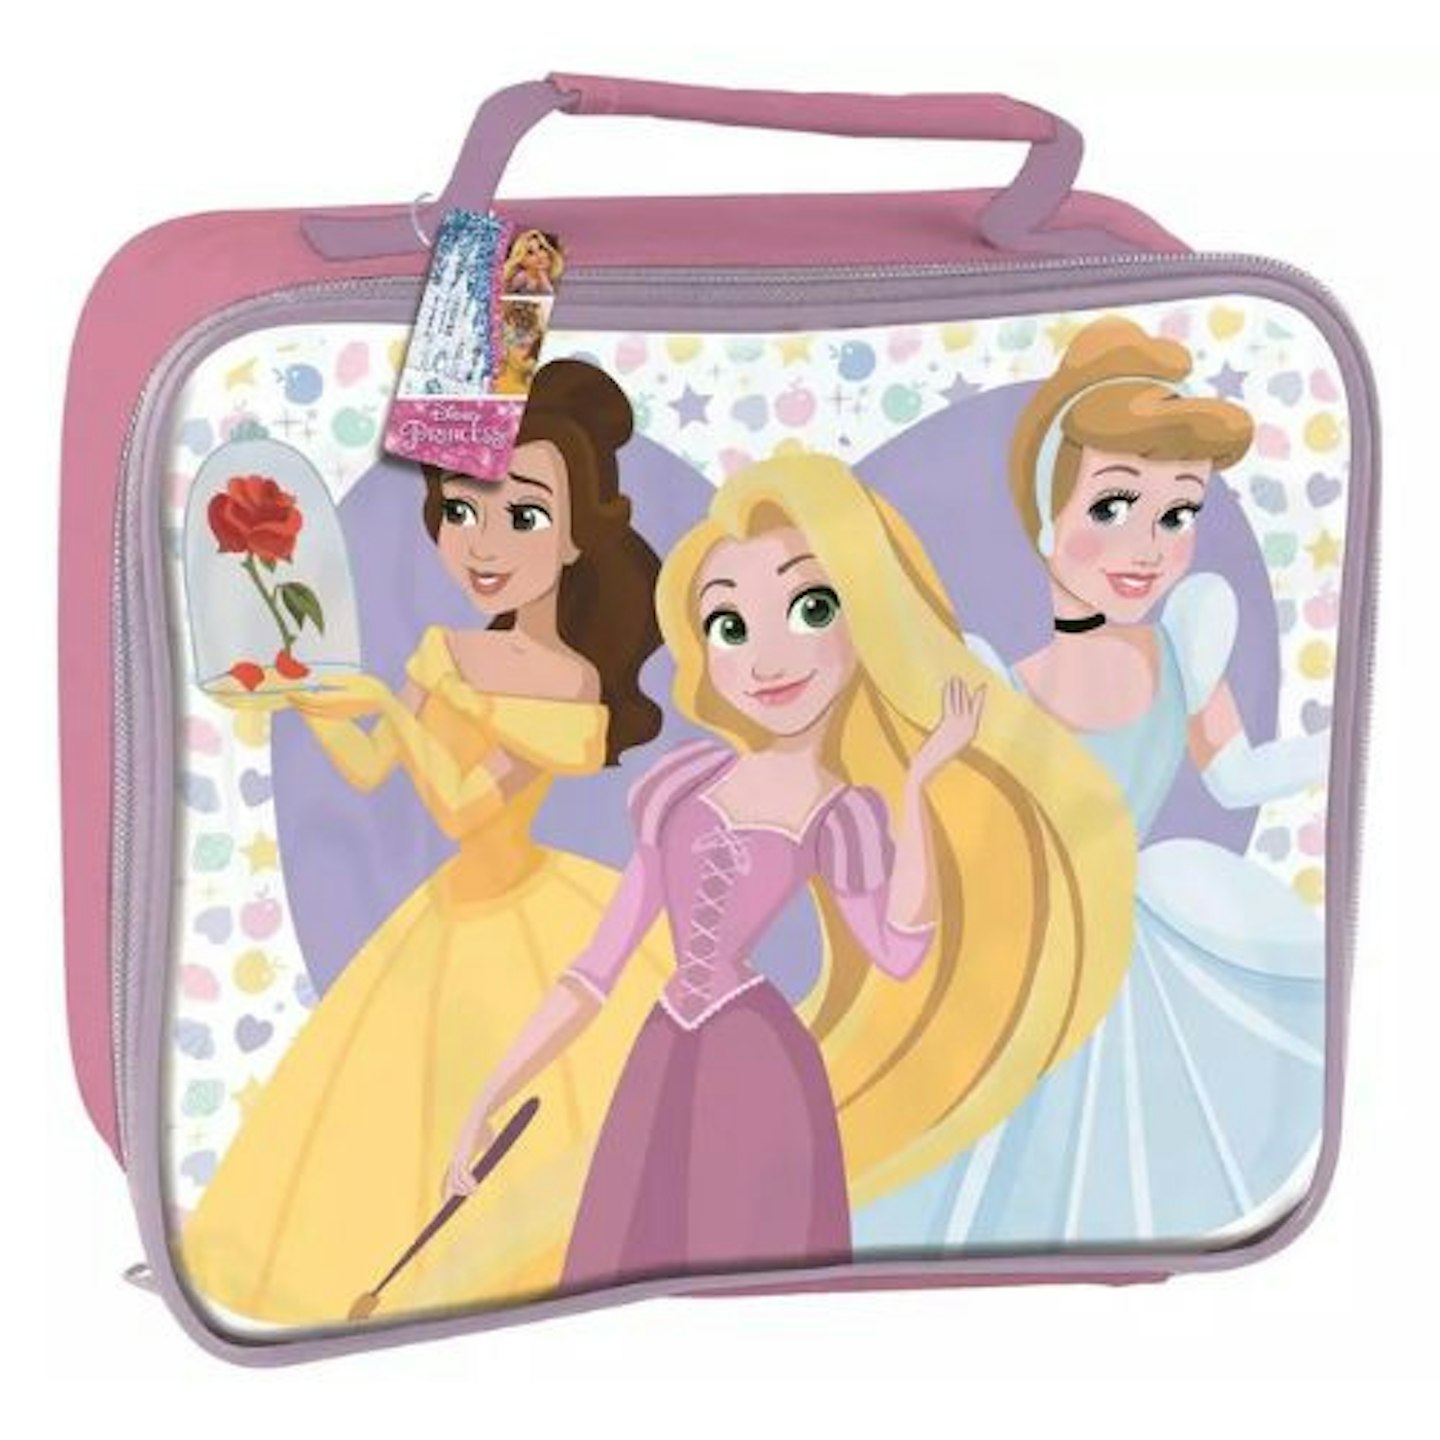 https://images.bauerhosting.com/affiliates/sites/12/motherandbaby/2022/08/Zak-Disney-Princess-Lunch-Bag.jpg?auto=format&w=1440&q=80